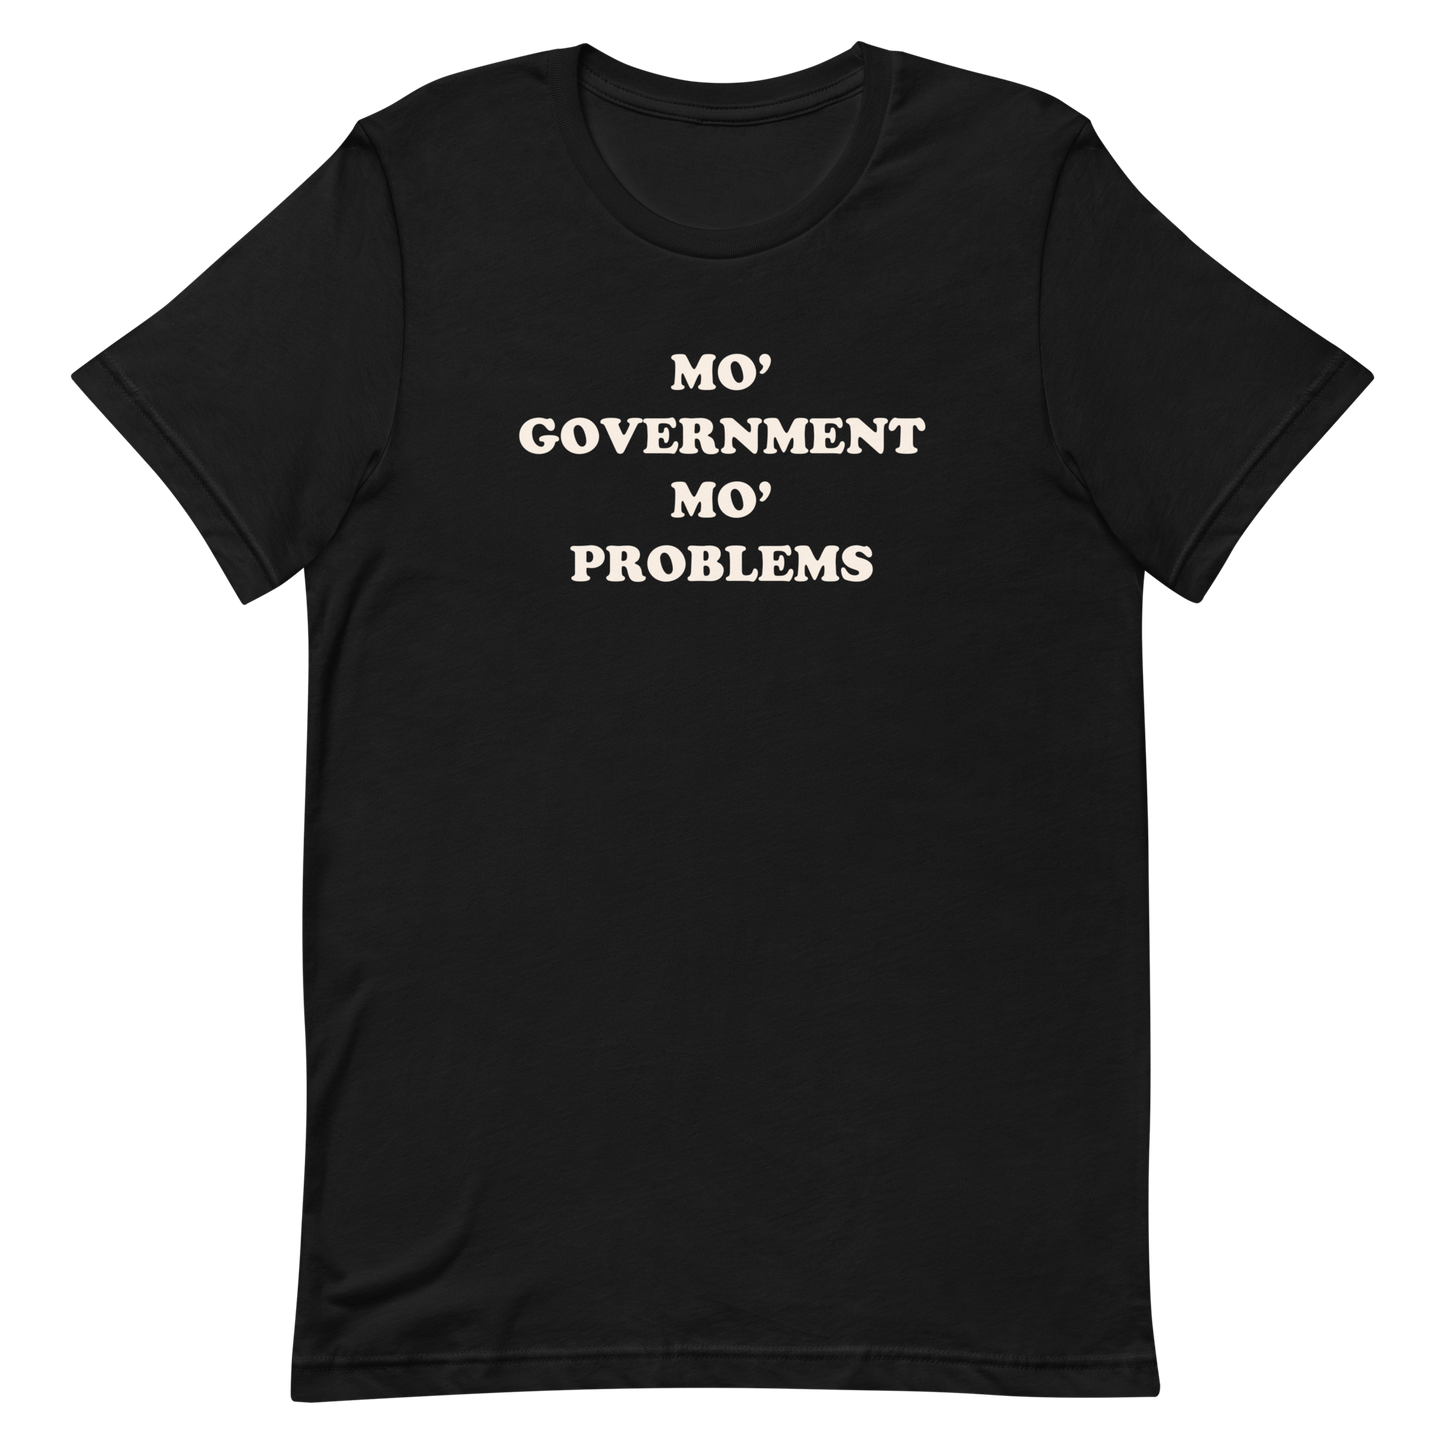 Mo' Government Mo' Problems T-shirt